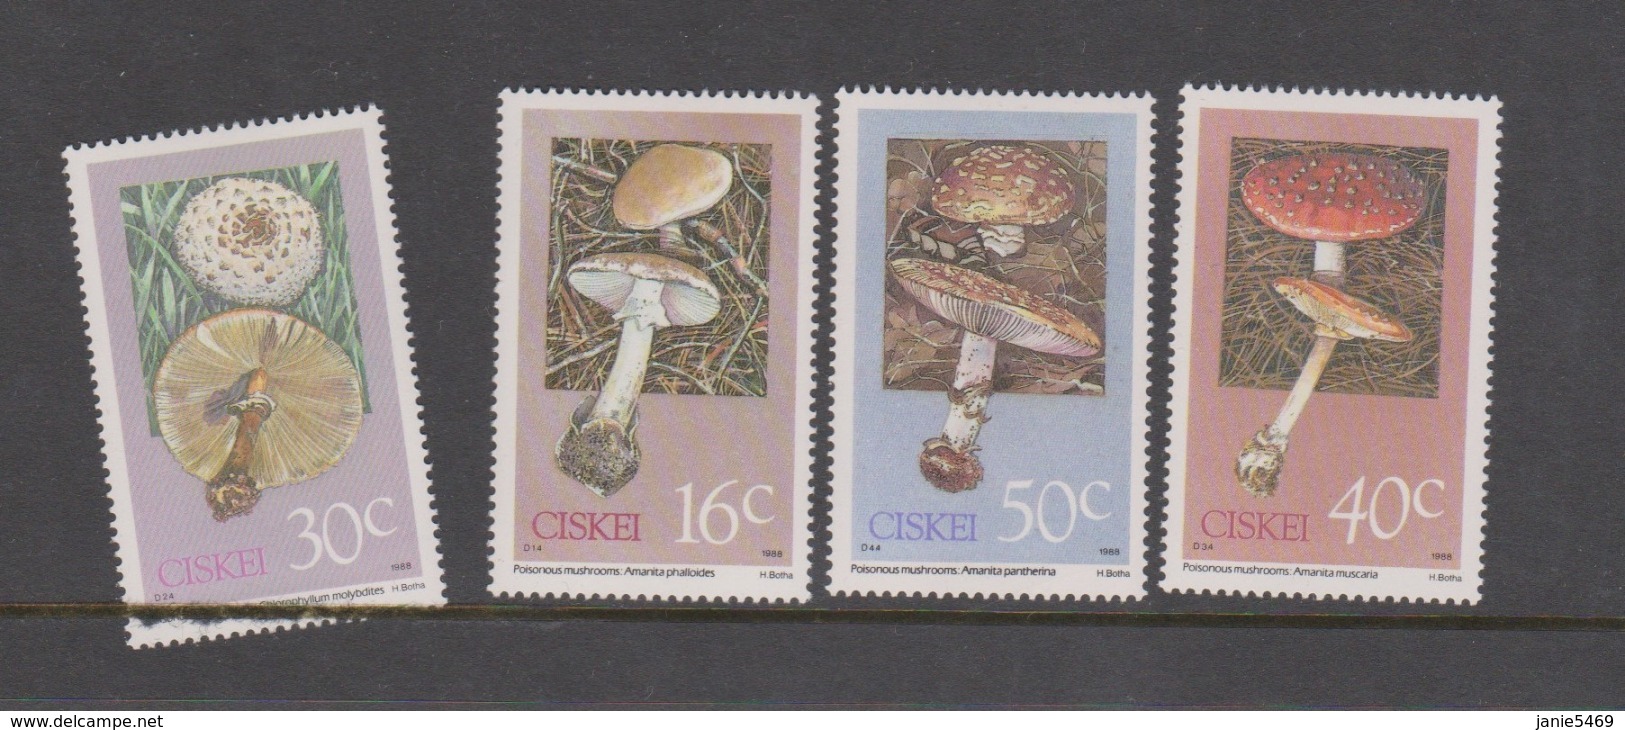 South Africa-Ciskei Scott 127-130 1988 Poisonous Mushrooms,mint Never Hinged - Ciskei